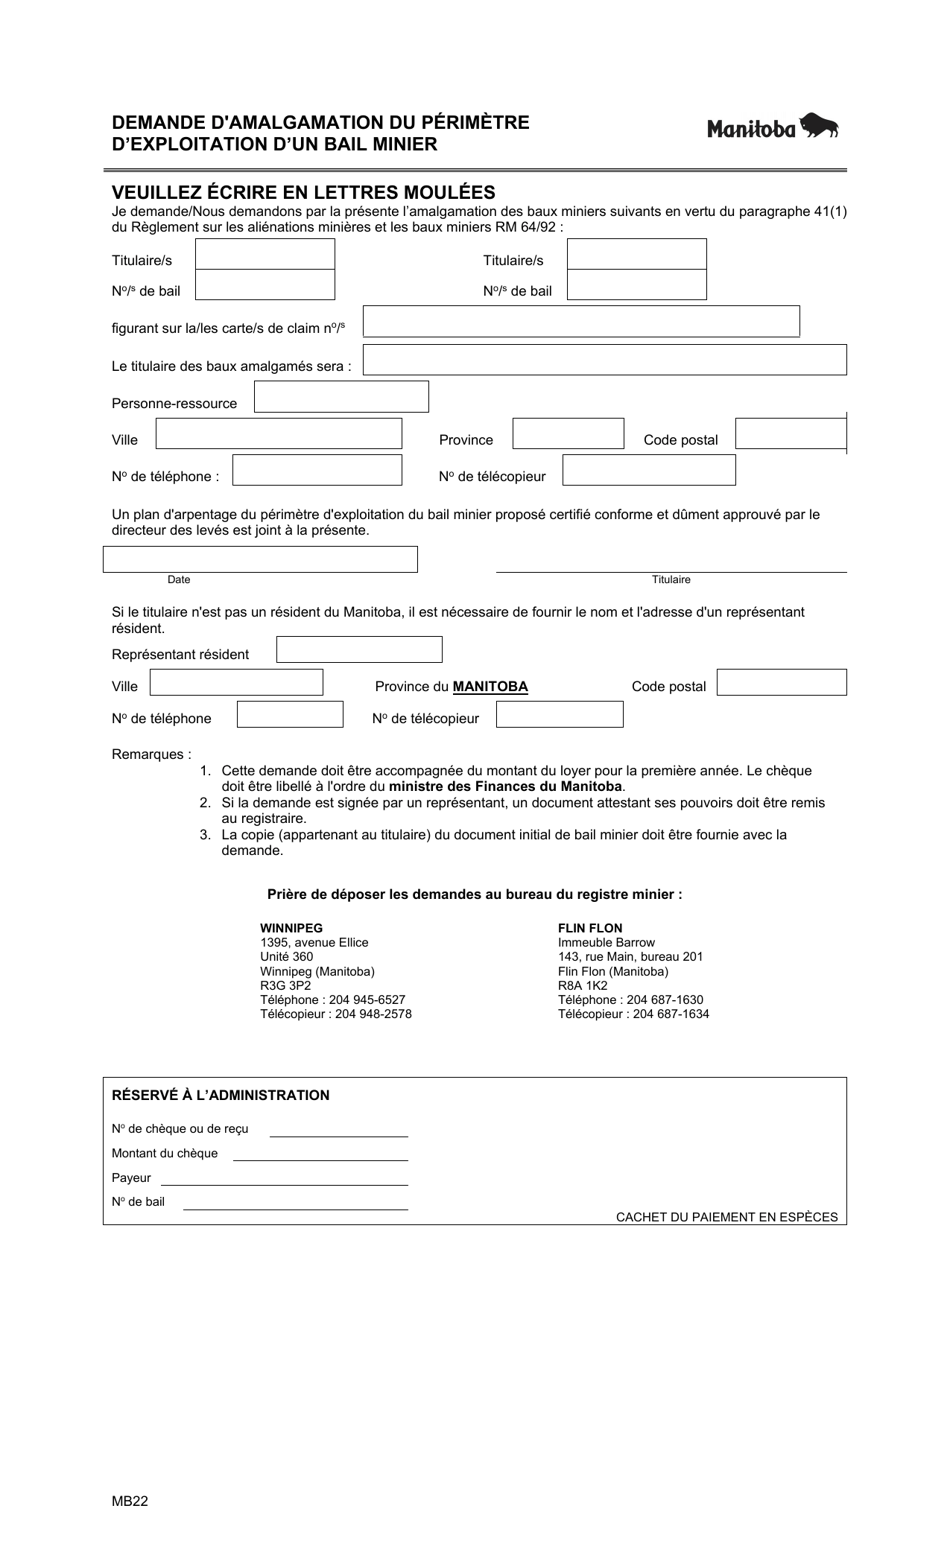 Forme MB22 Demande Damalgamation Du Perimetre Dexploitation Dun Bail Minier - Manitoba, Canada (French), Page 1